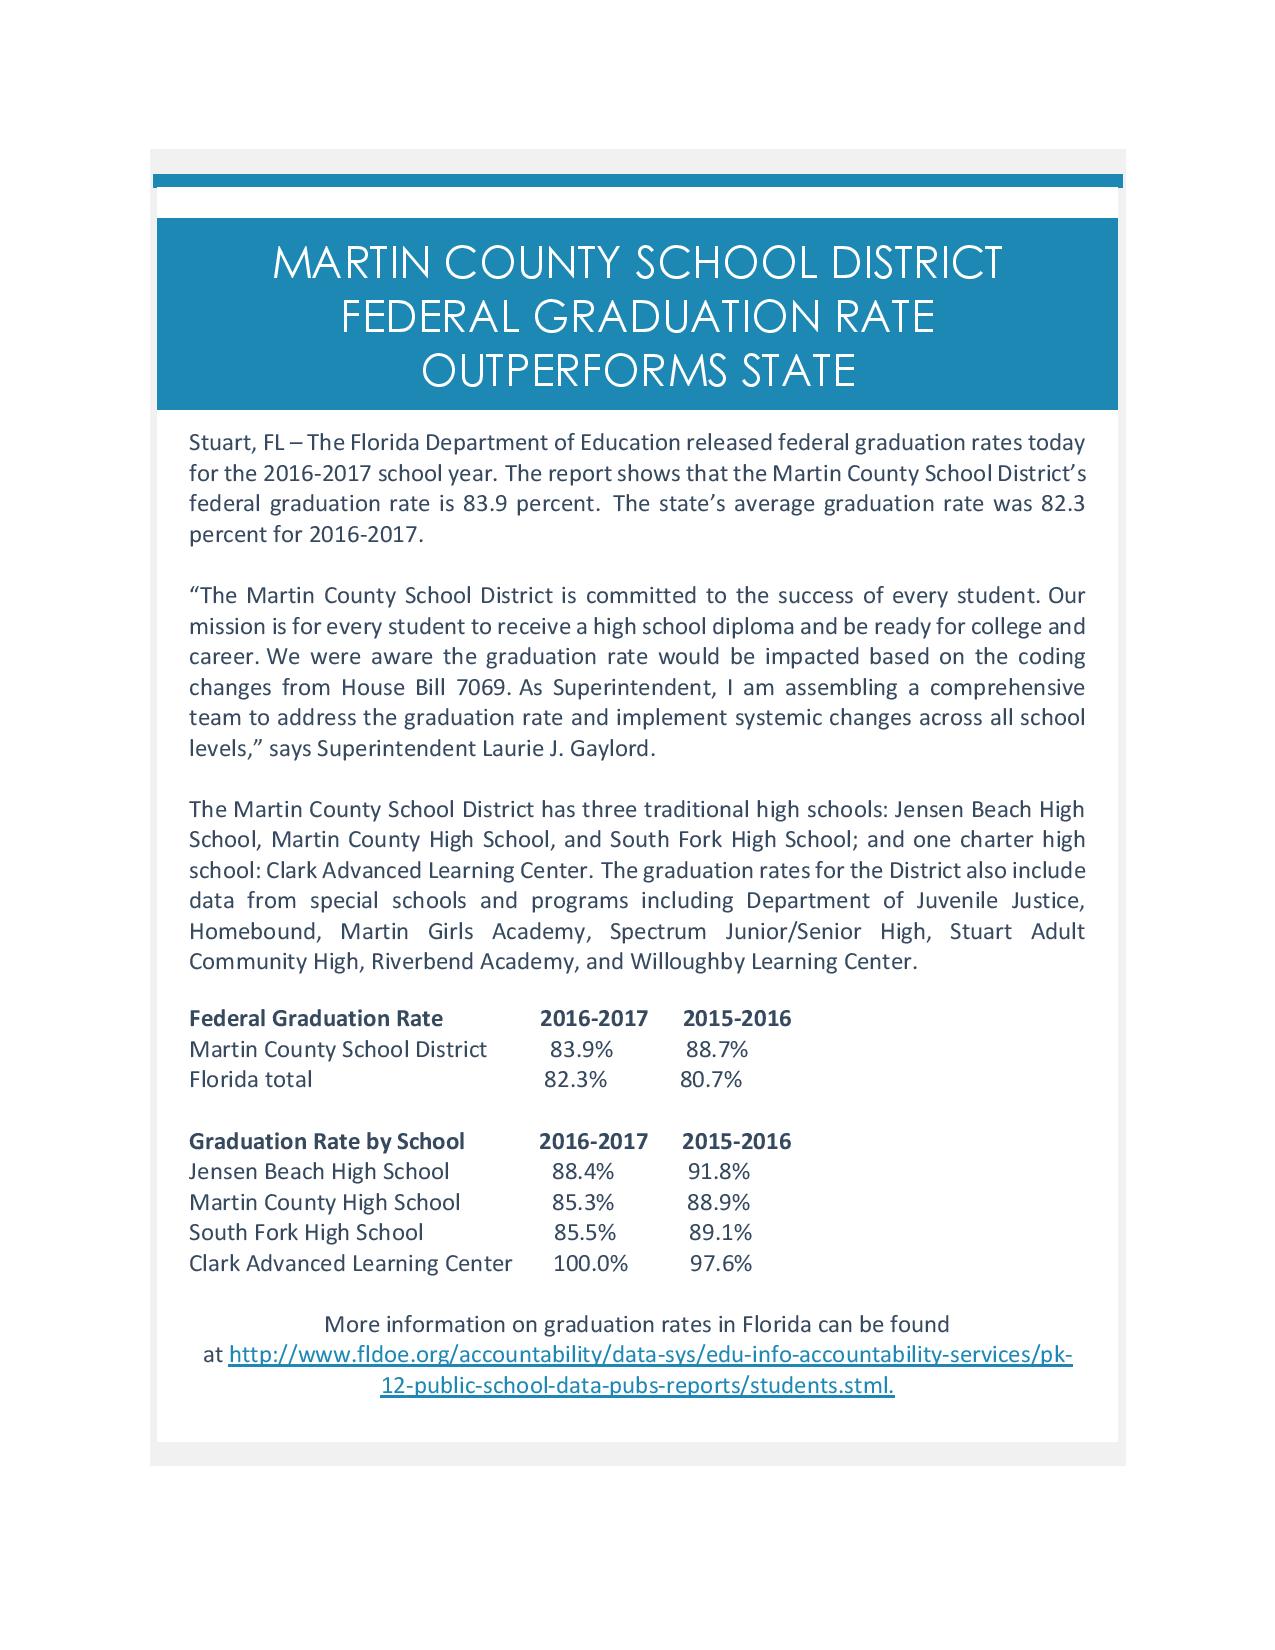 Latest Martin County Graduation Rates Announced